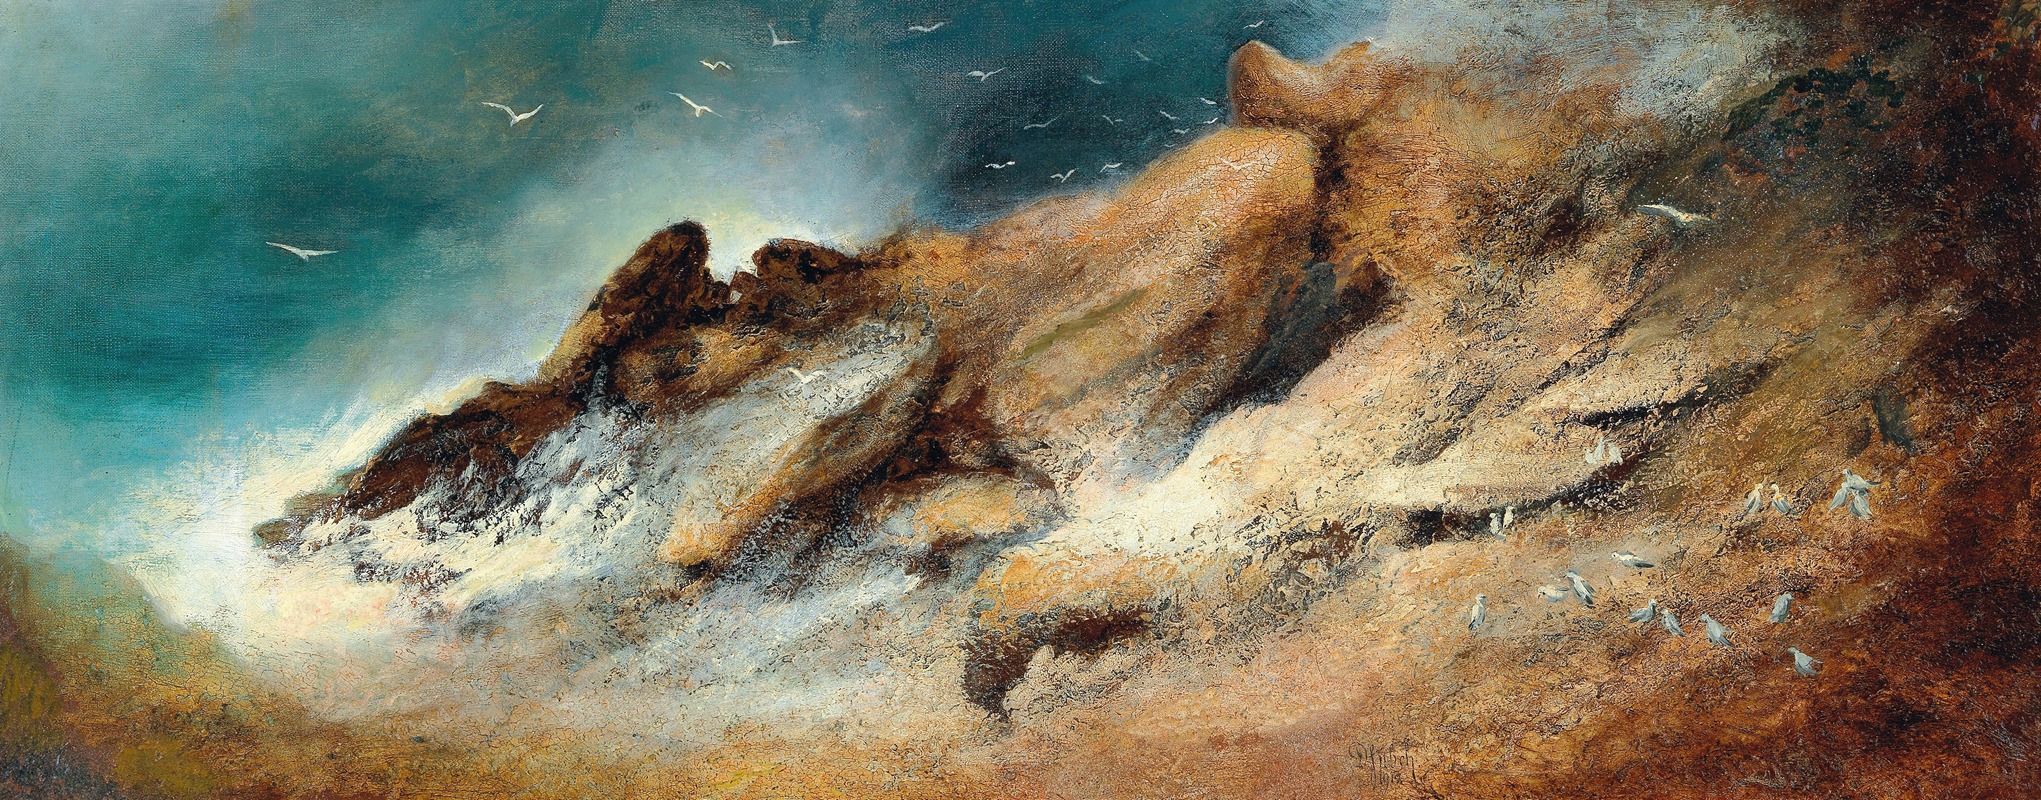 Karl Wilhelm Diefenbach - Seagulls in a stormy bay